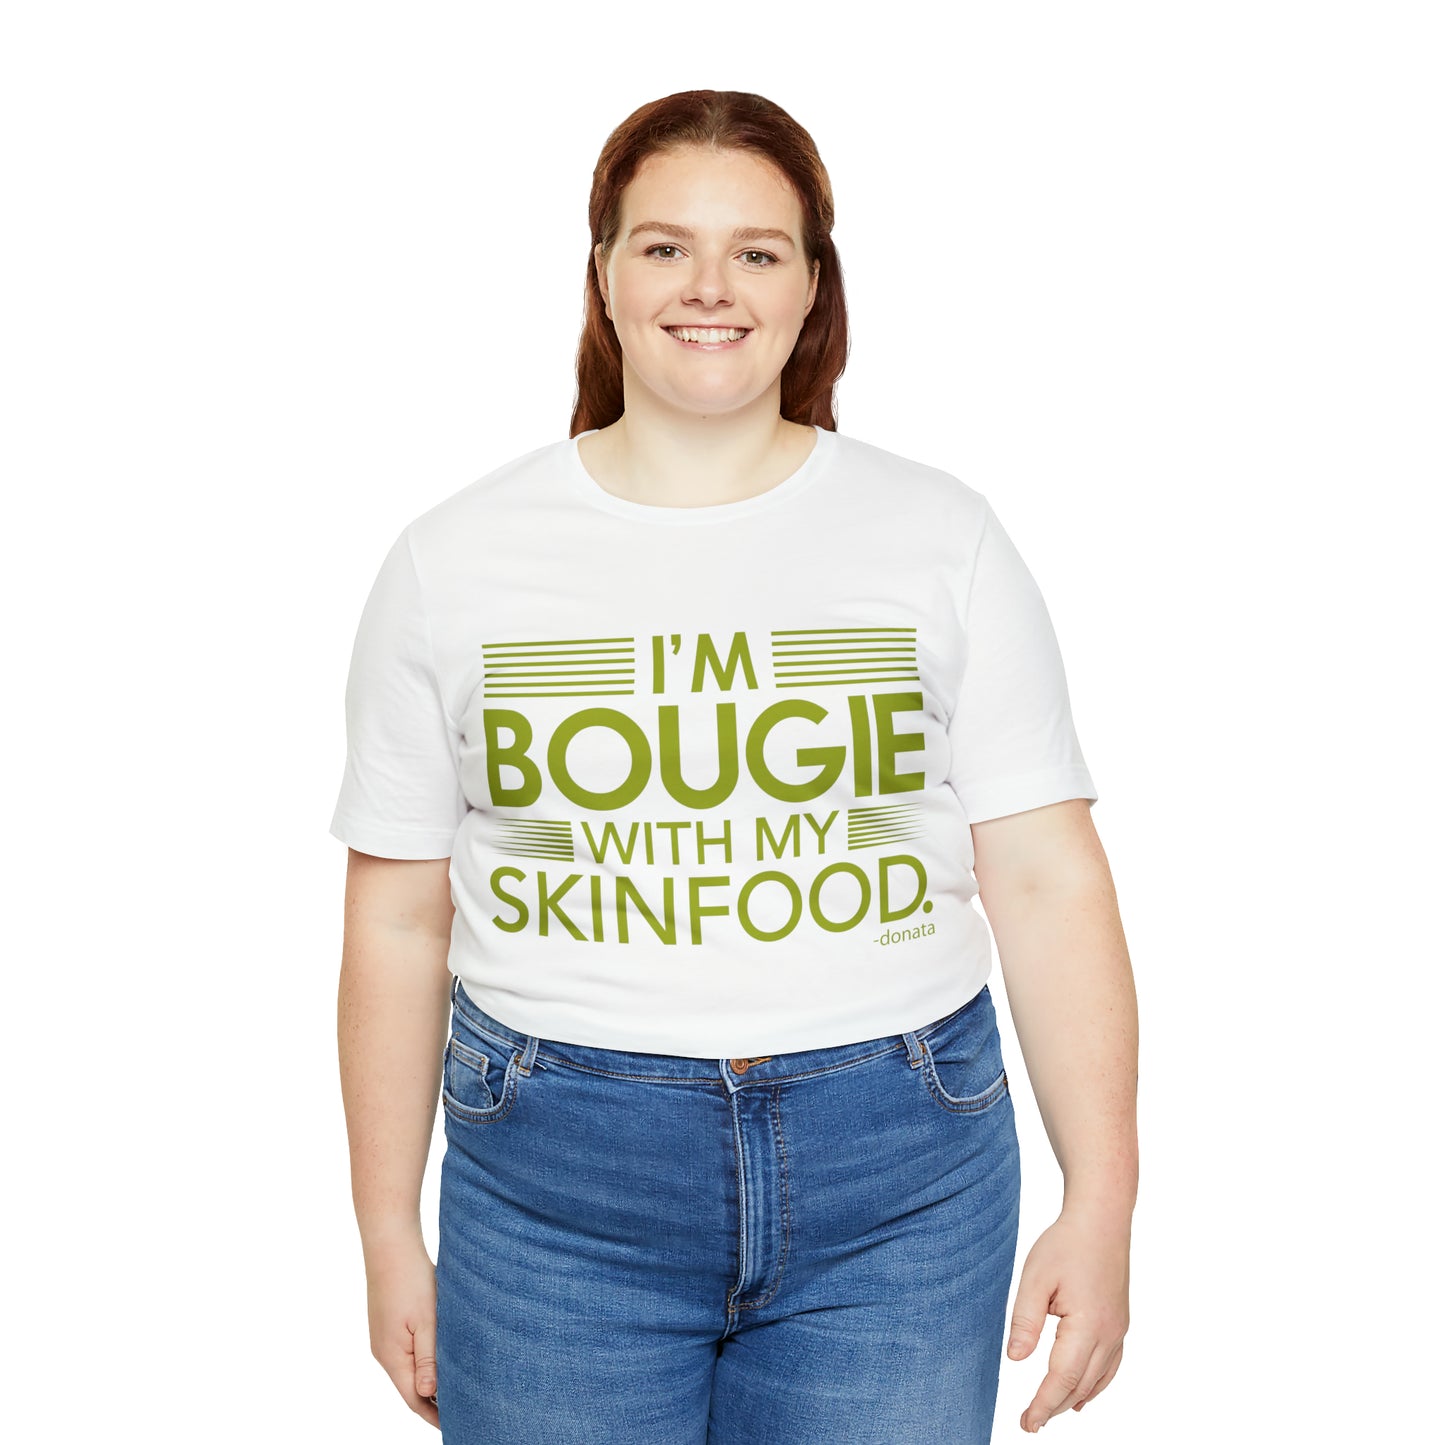 I'm bougie ... skinfood